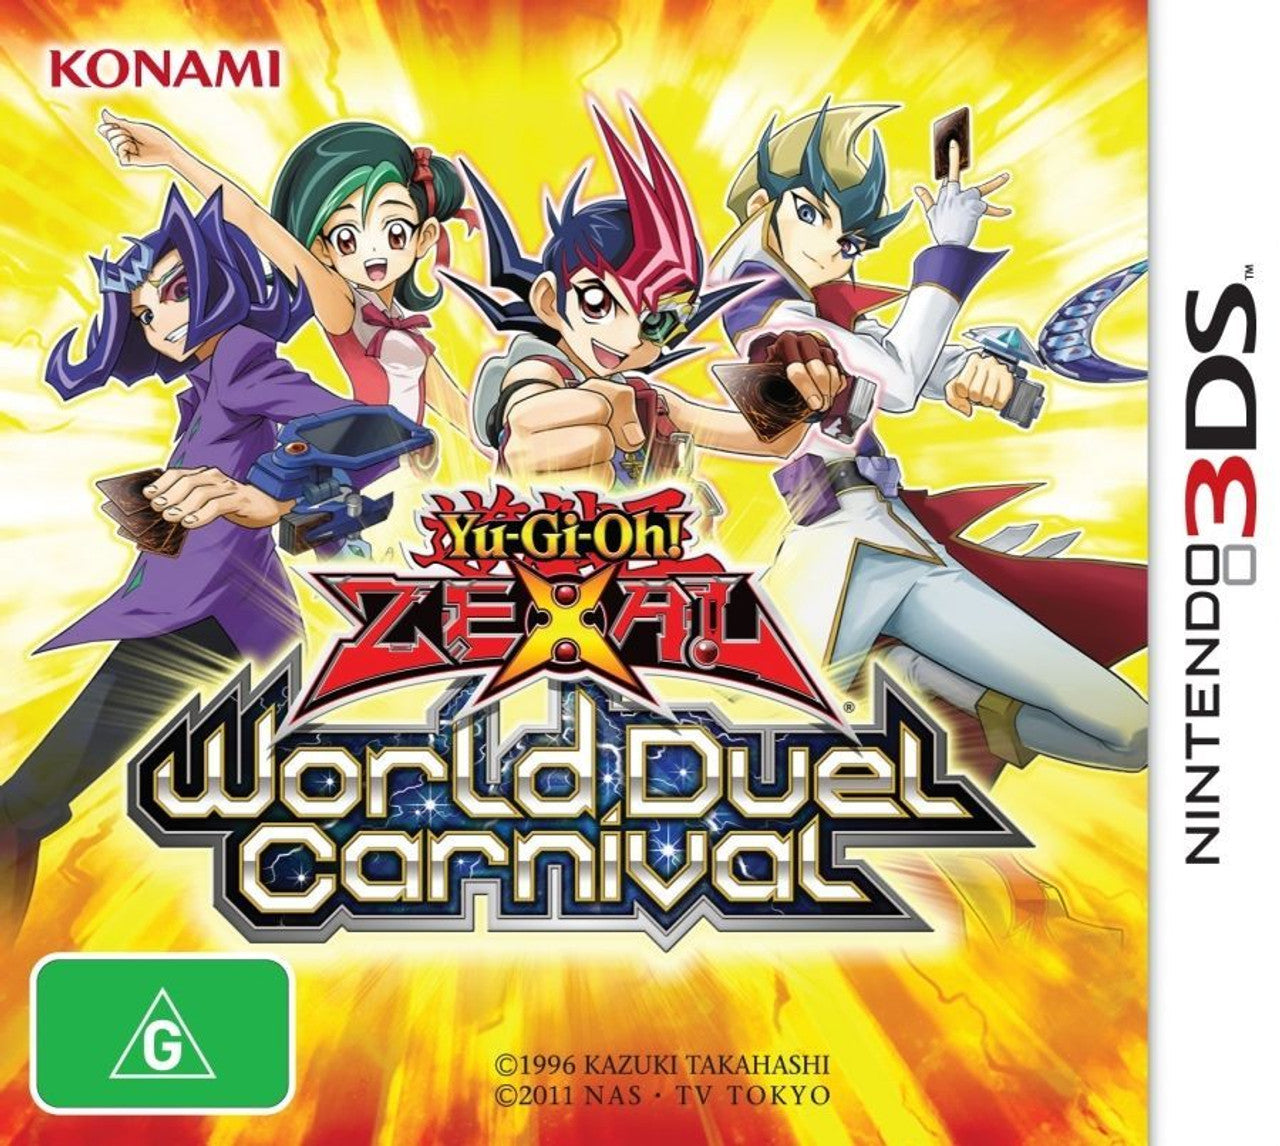 Game | Nintendo 3DS | Yu-Gi-Oh! Zexal: World Duel Carnival